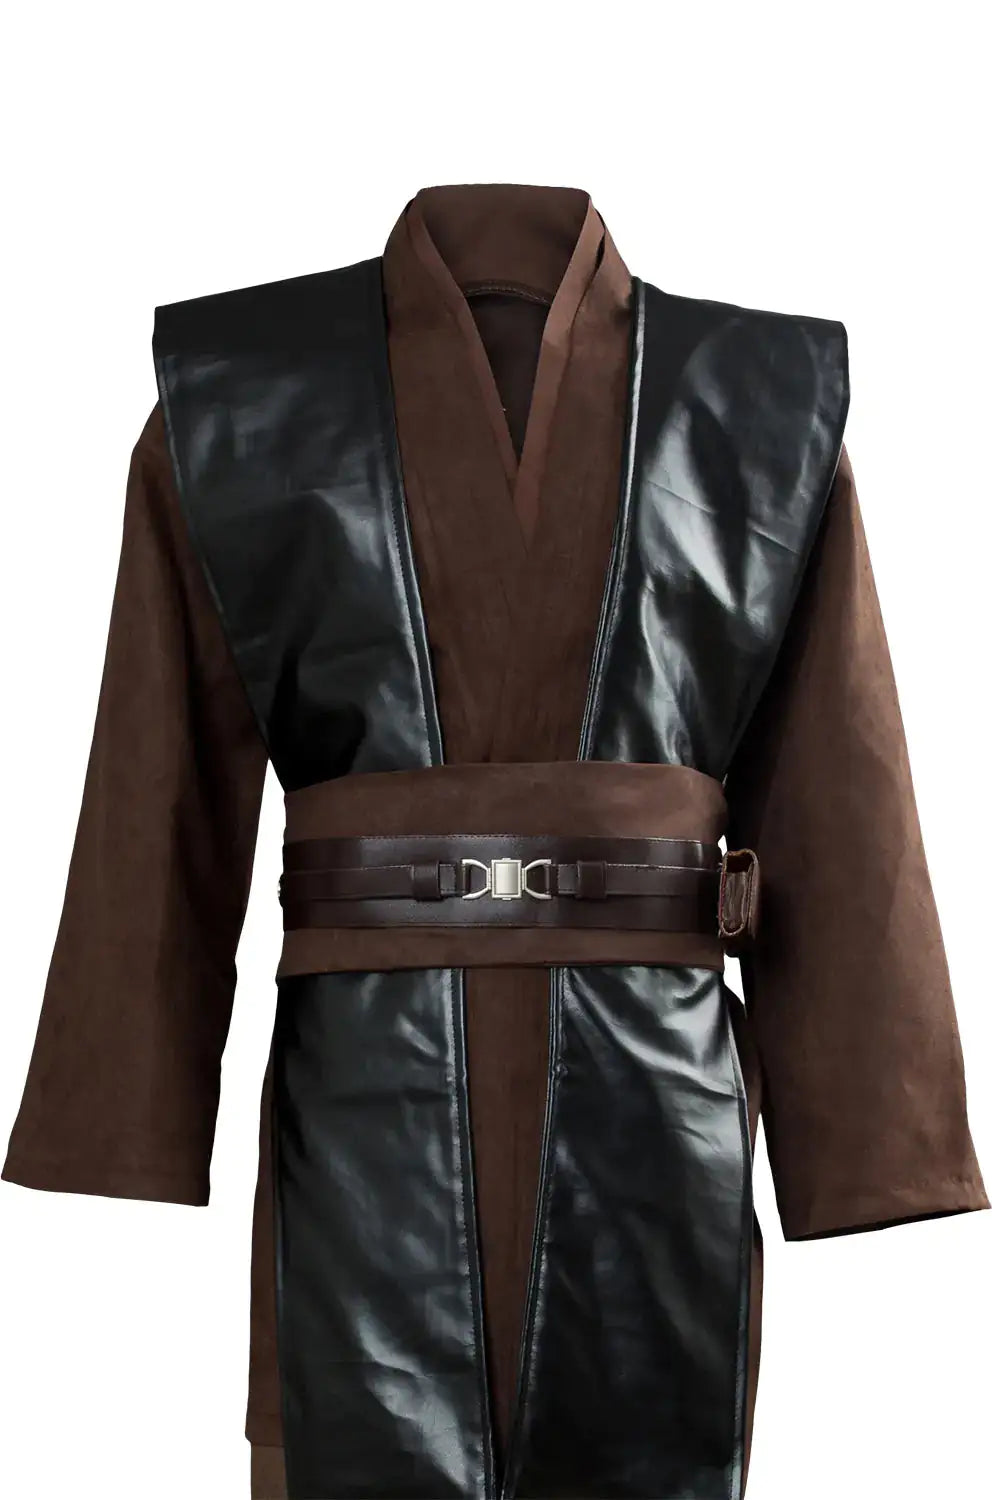 Anakin Skywalker Costume Set